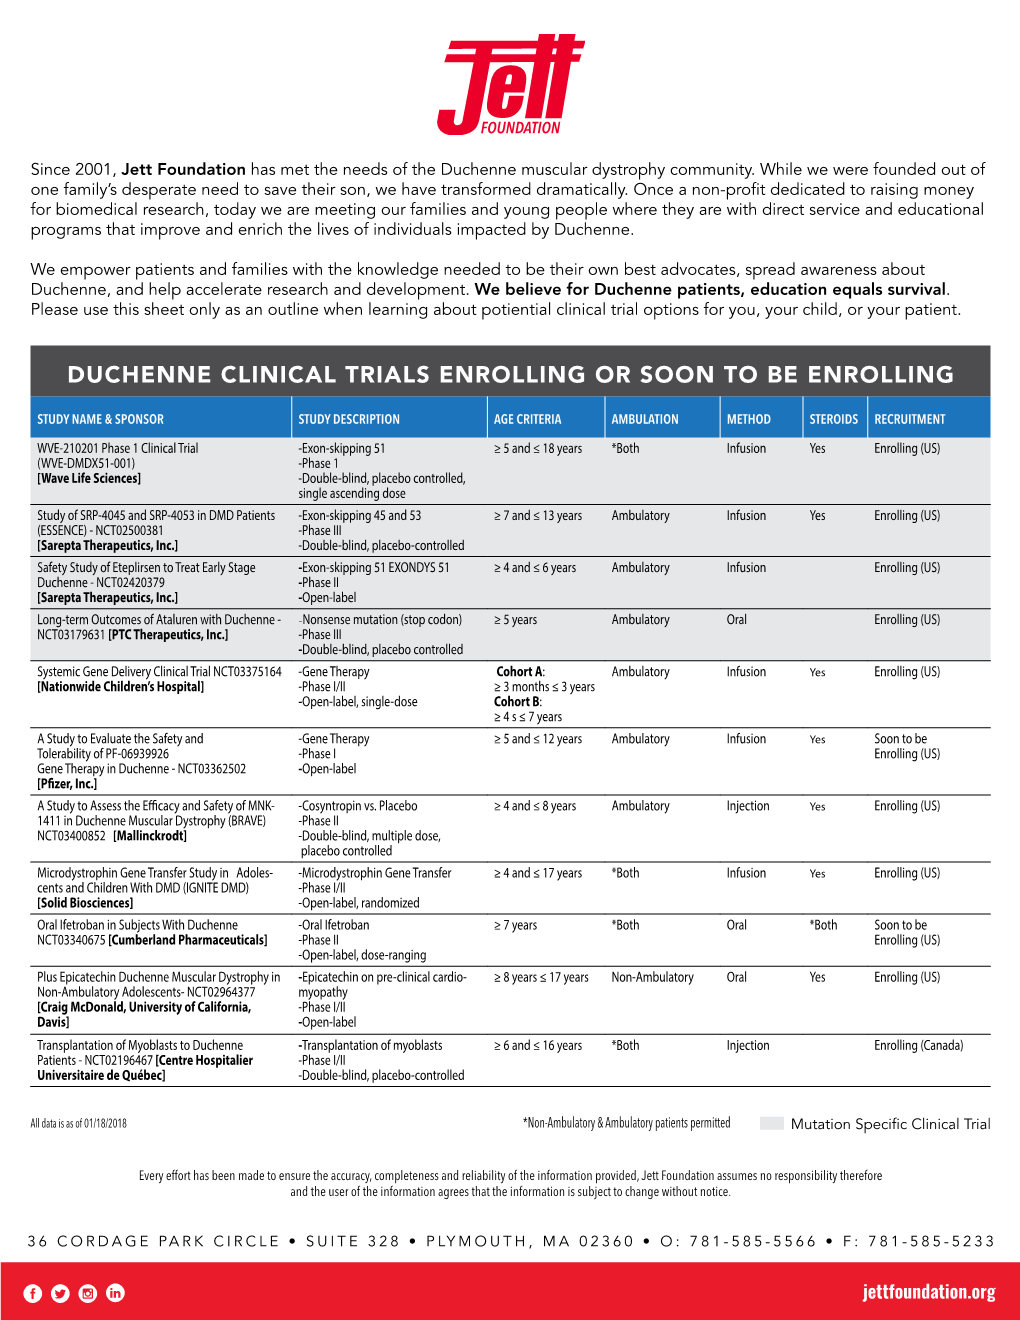 Duchenne Clinical Trials Enrolling Or Soon to Be Enrolling